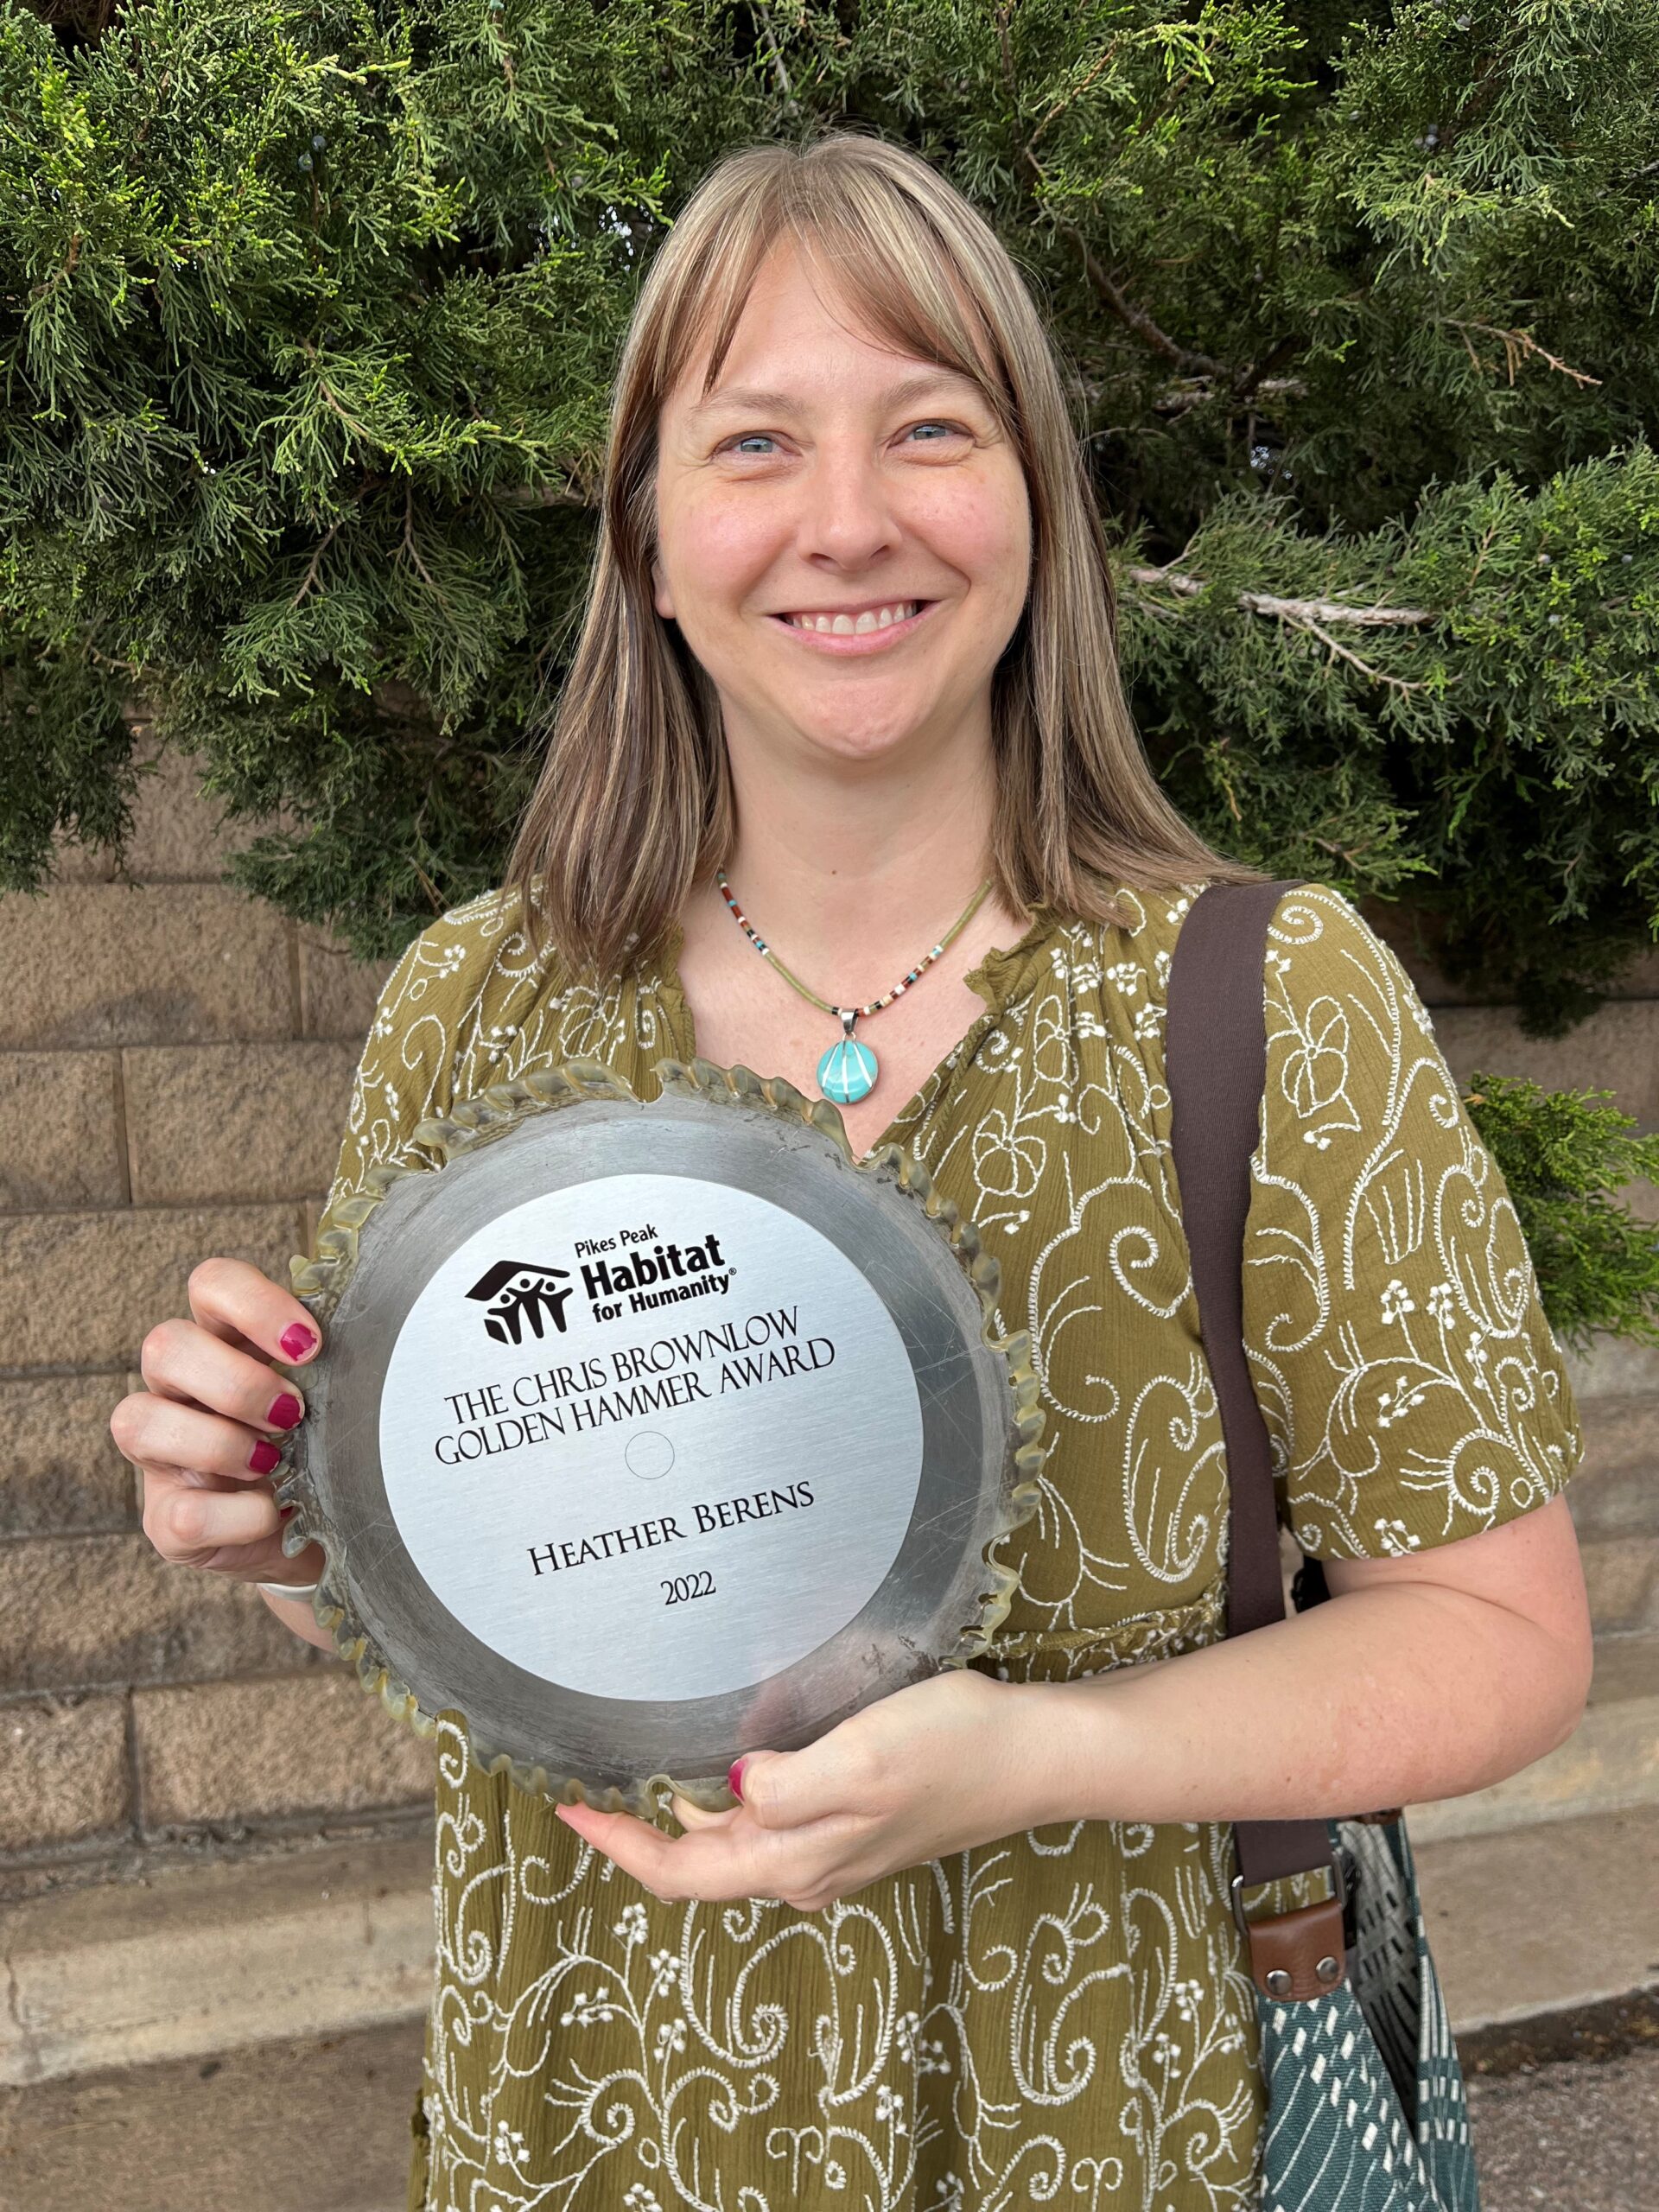 Smiling woman holding an award